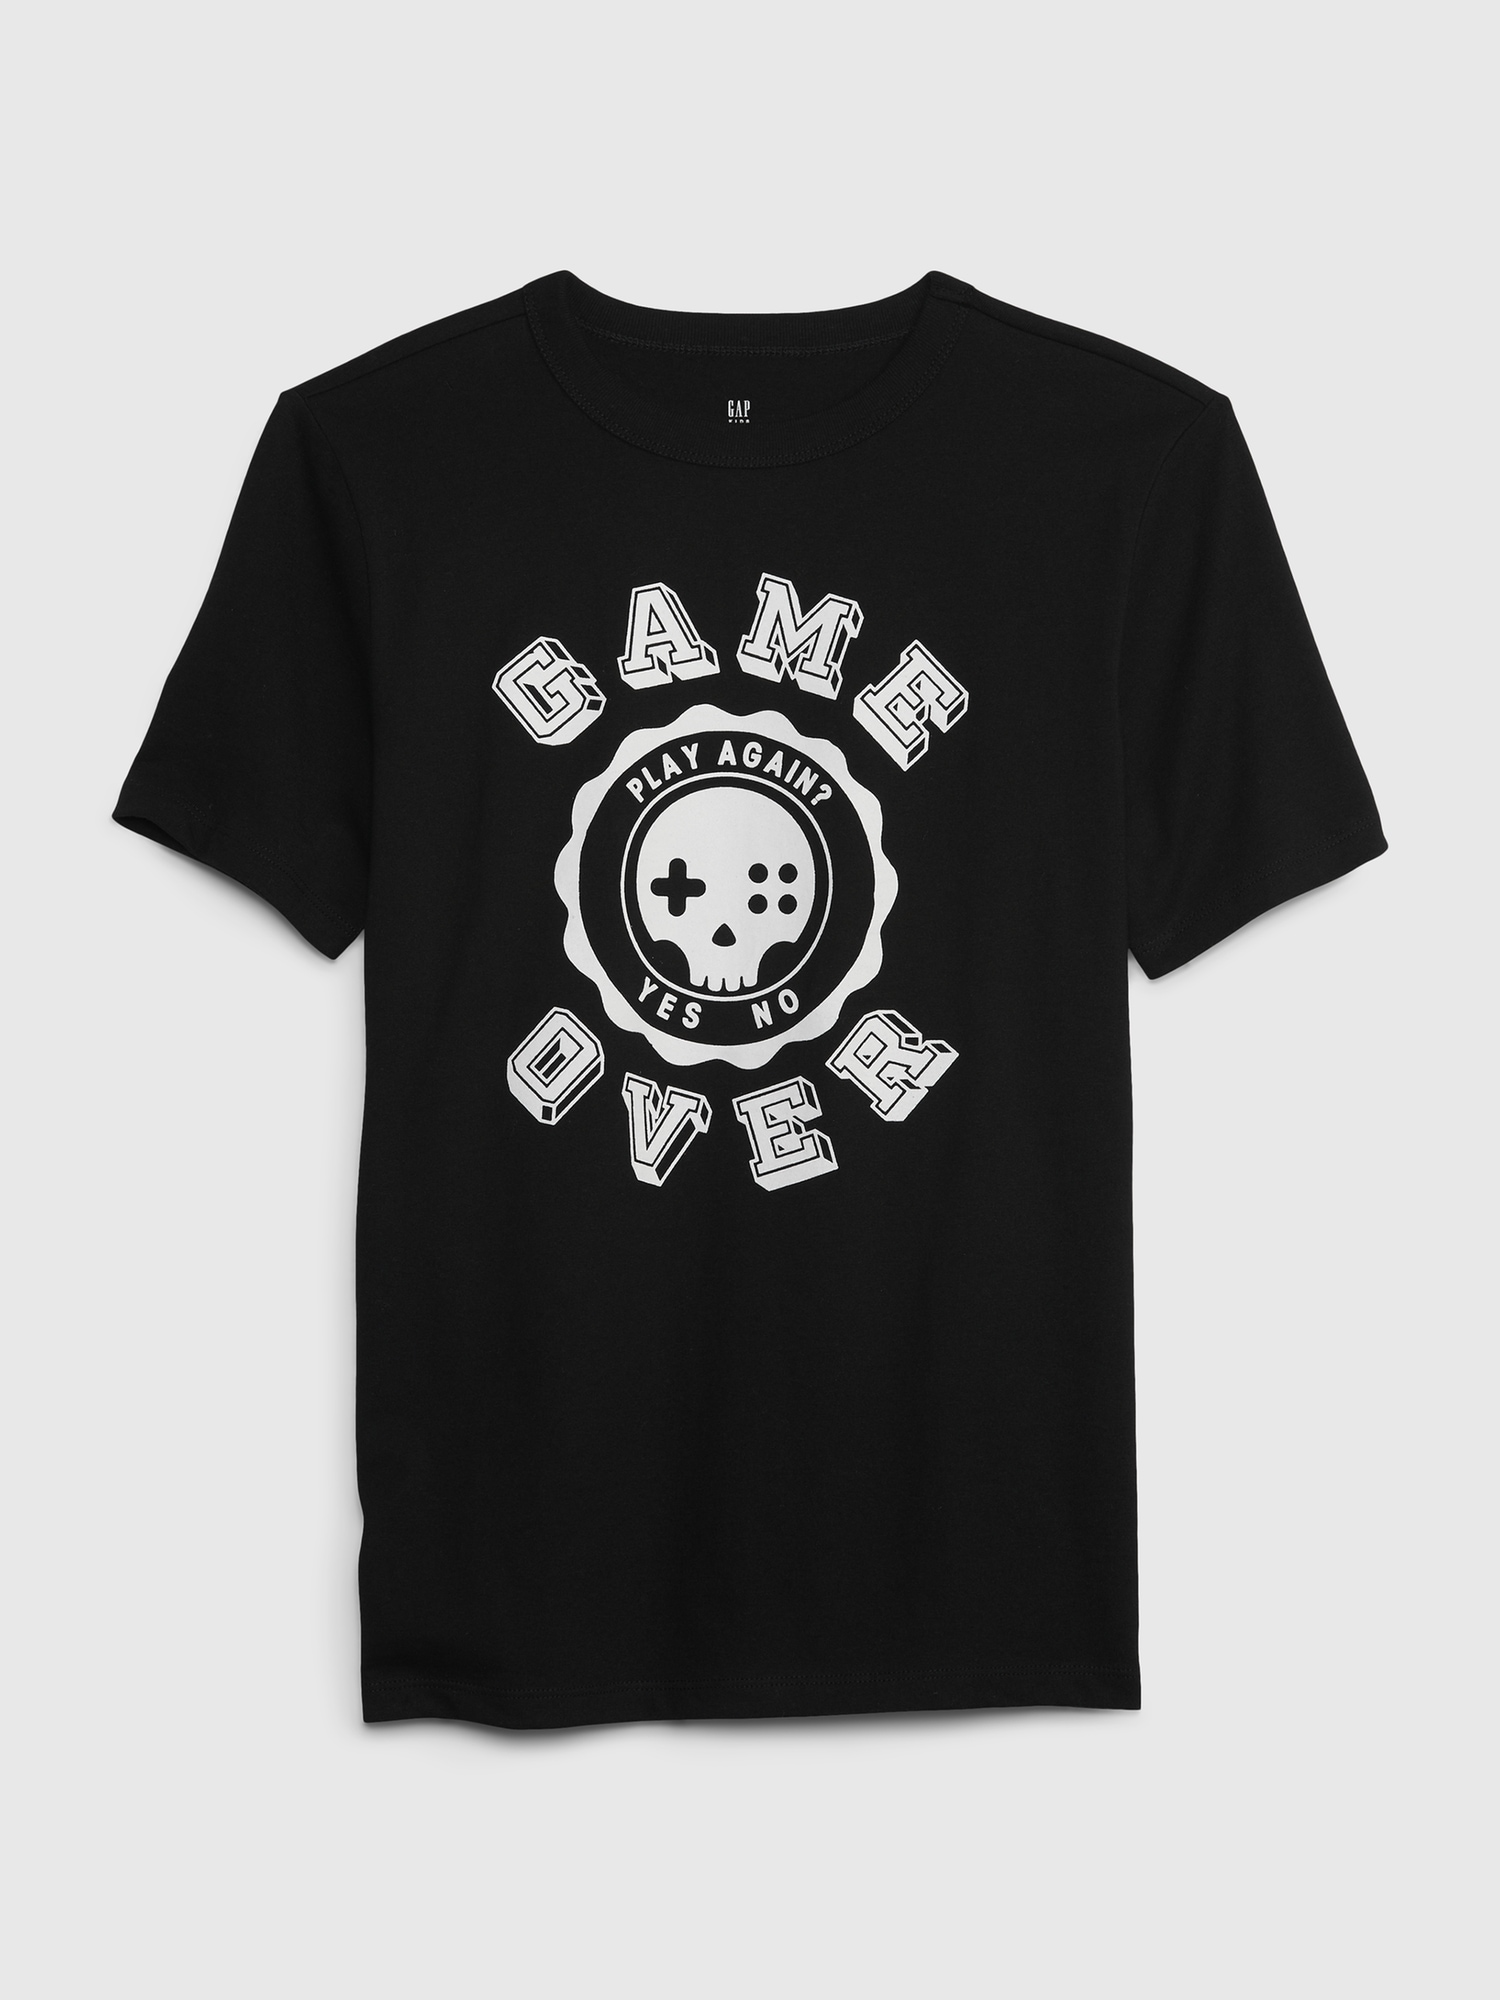 Kids Organic Cotton Graphic T-Shirt | Gap